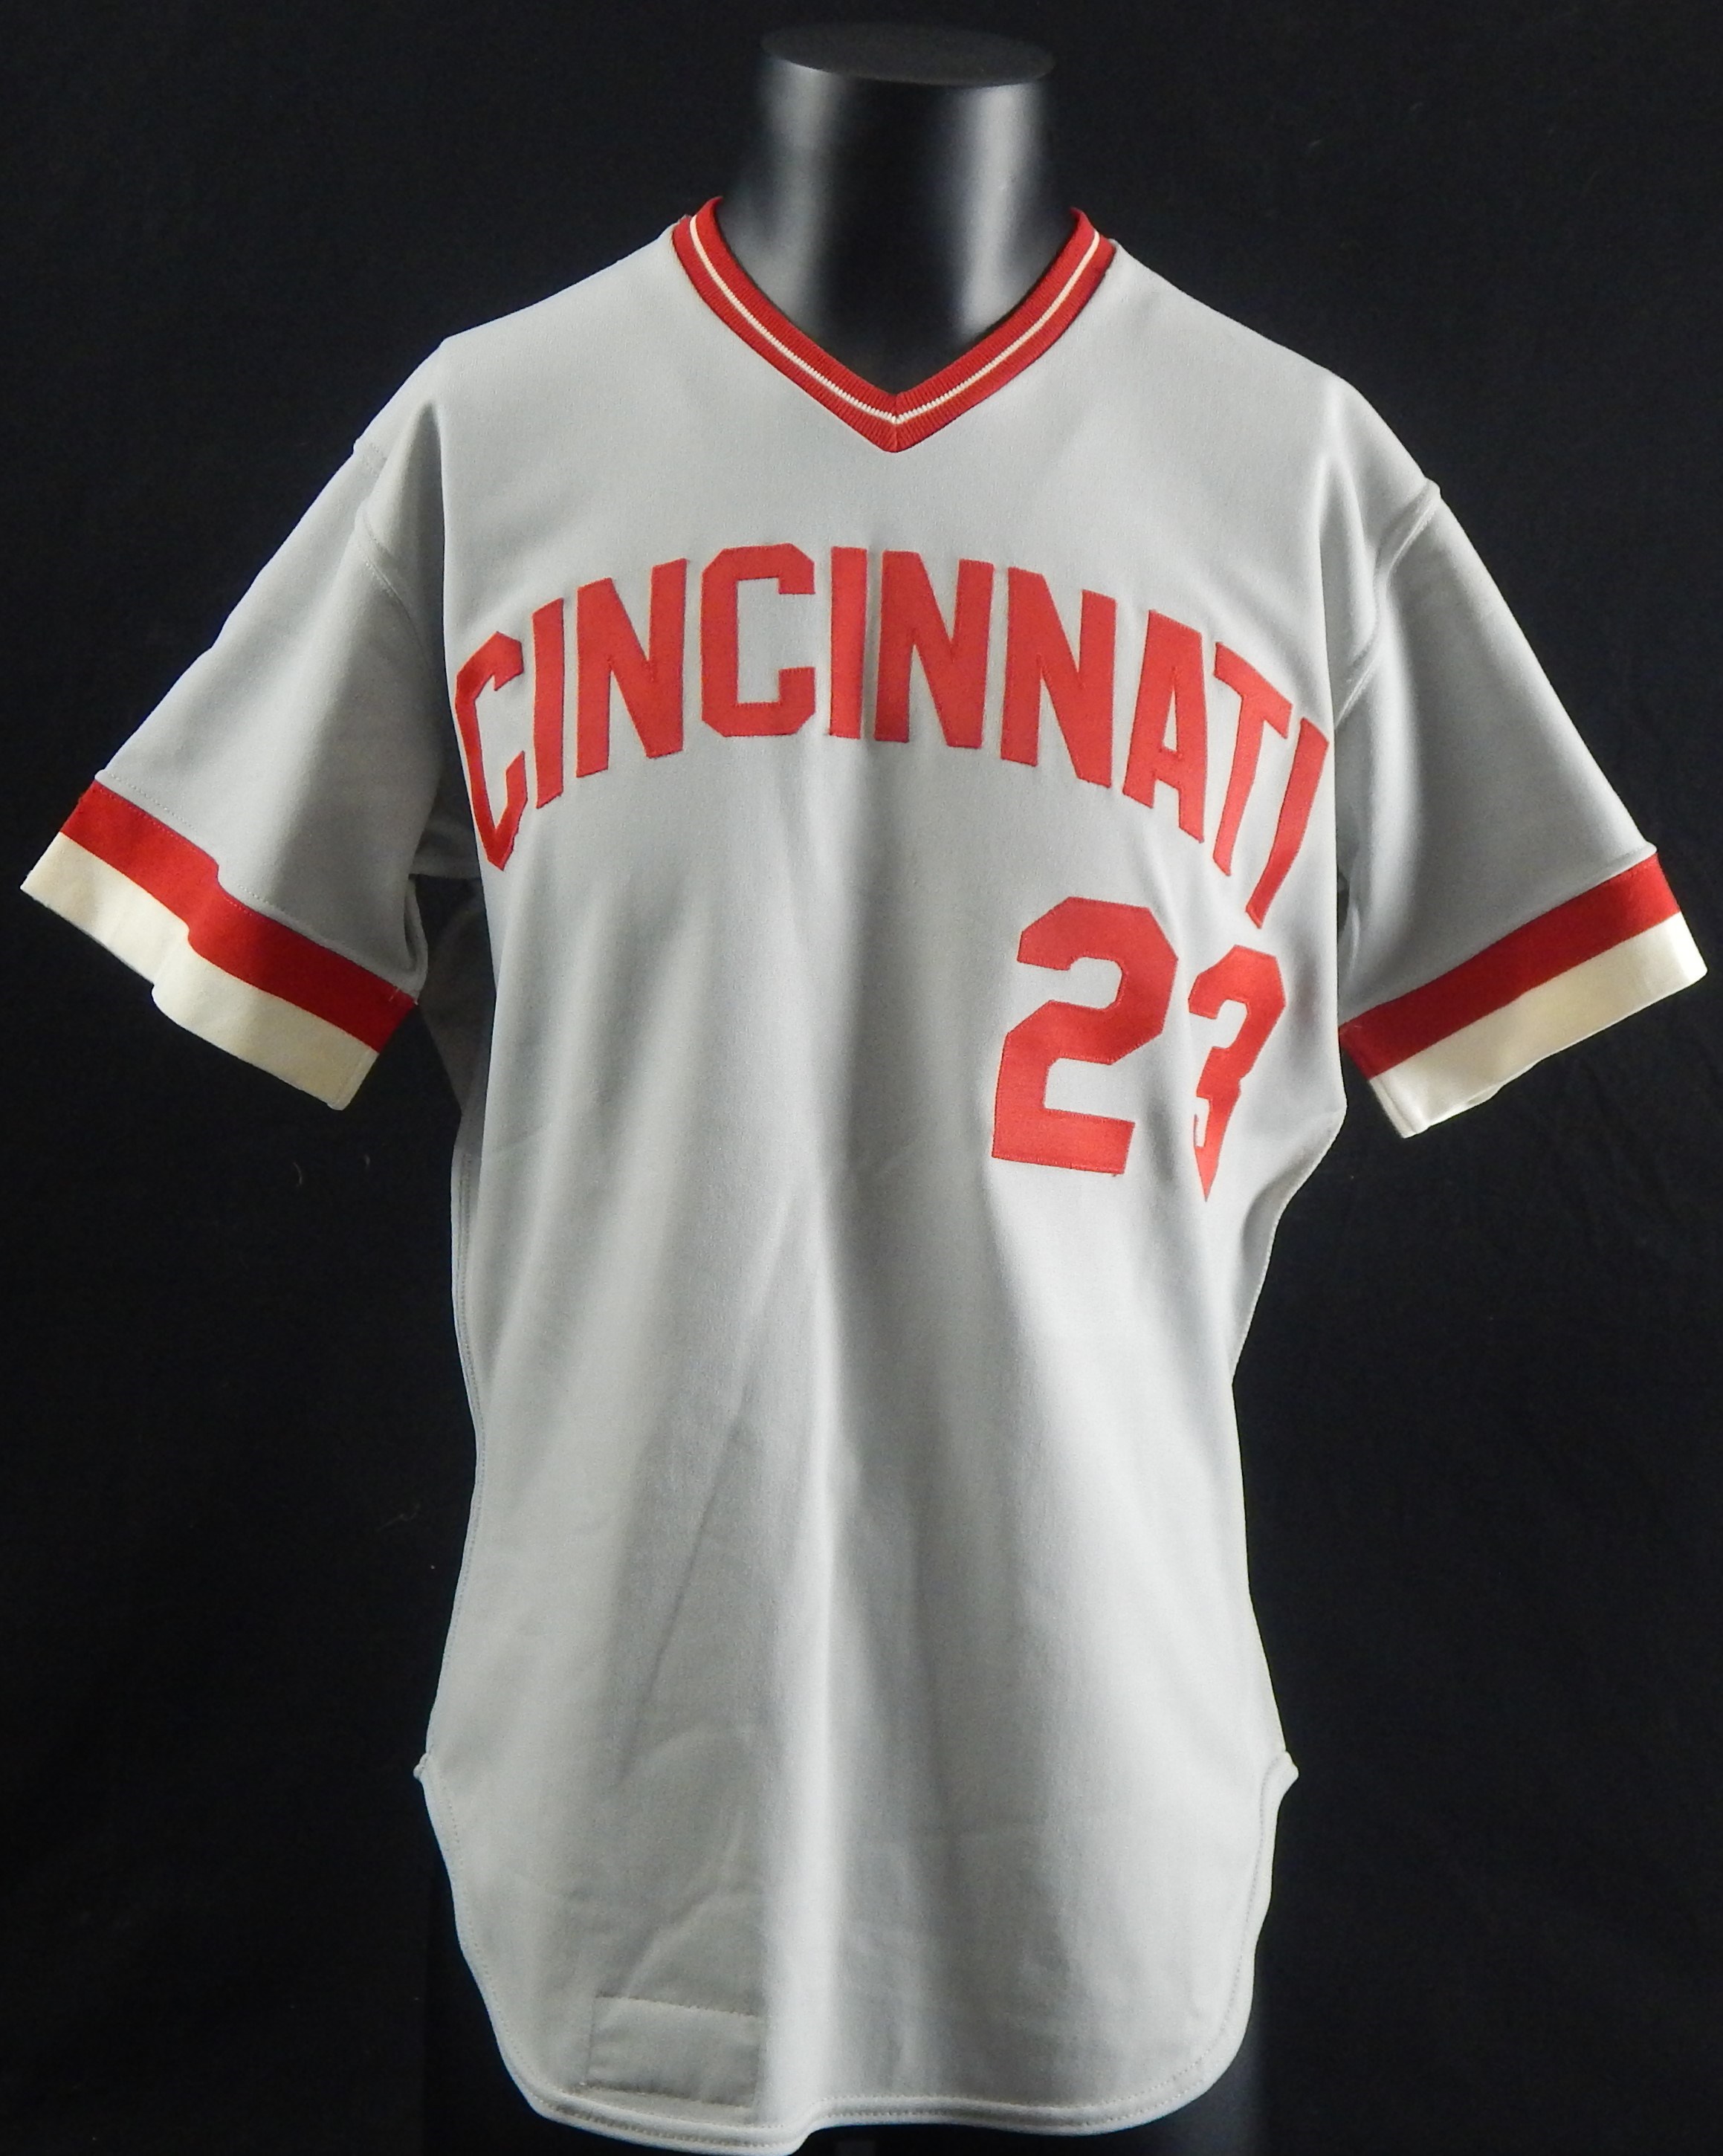 Baseball Jerseys - 1978 Tour of Japan Cincinnati Reds Jersey From the Bernie Stowe Collection